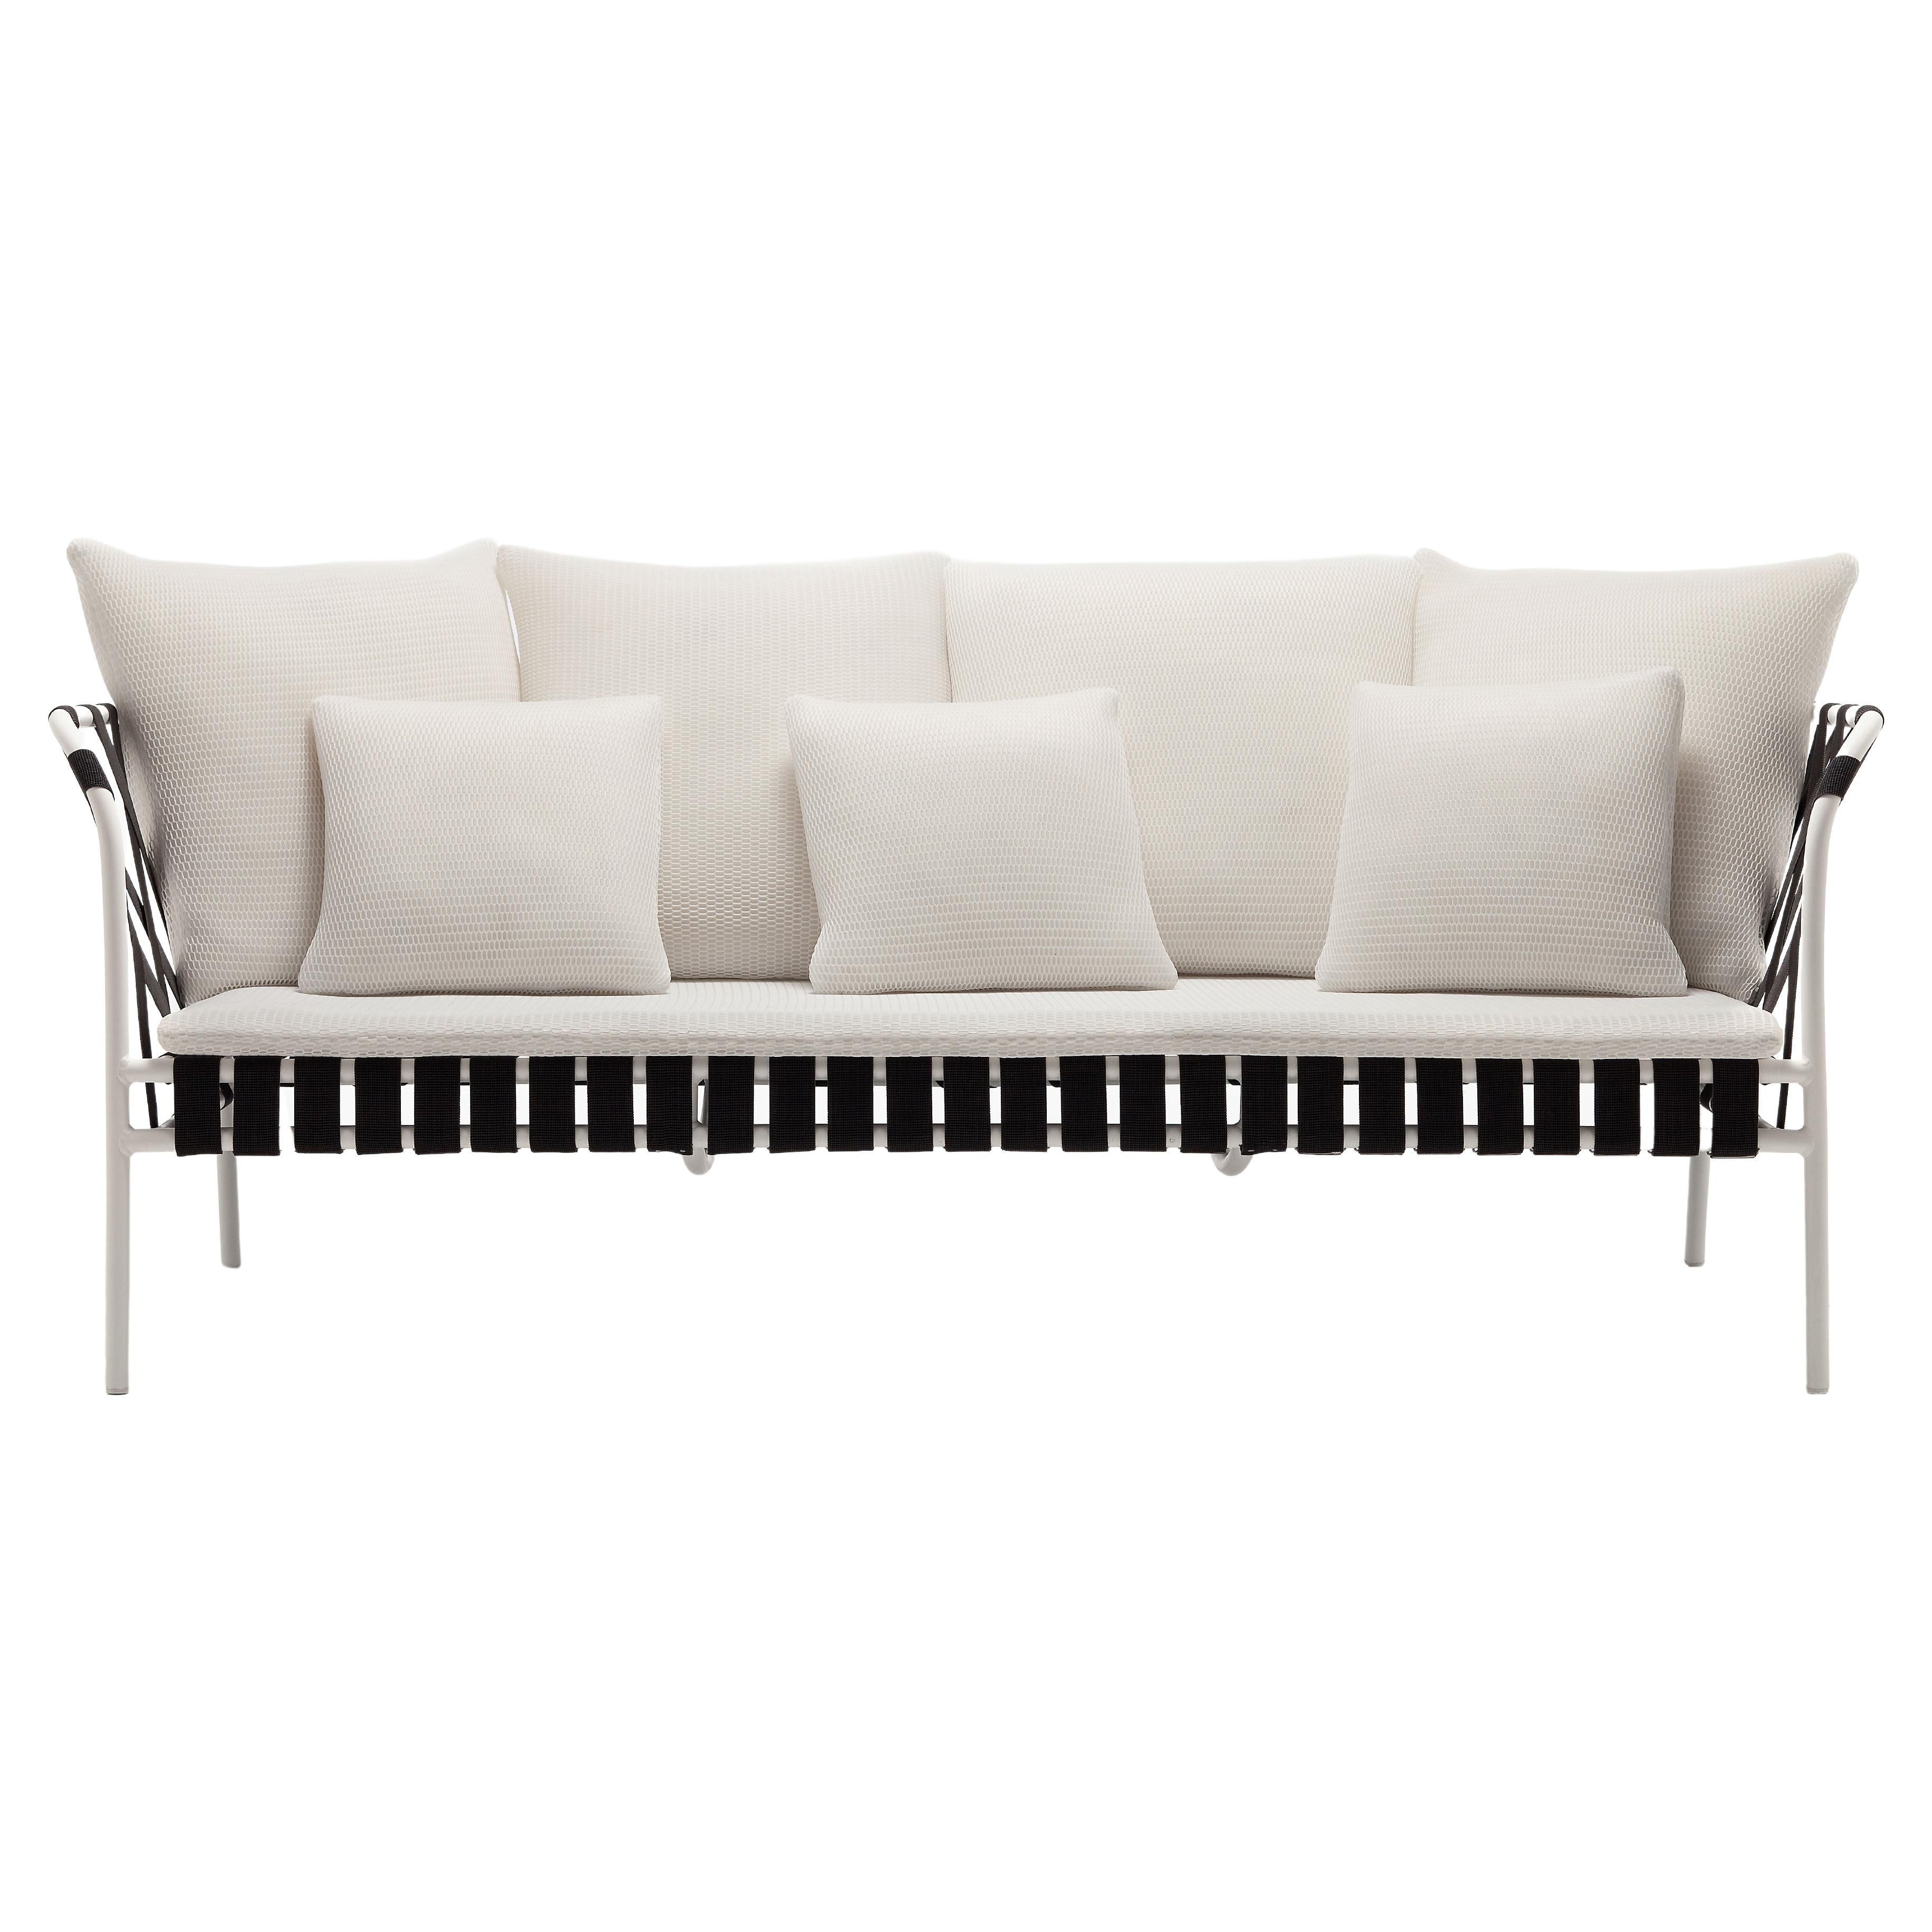 Gervasoni Large Inout Sofa in Aspen 02 Upholstery & White Frame with Black Belts